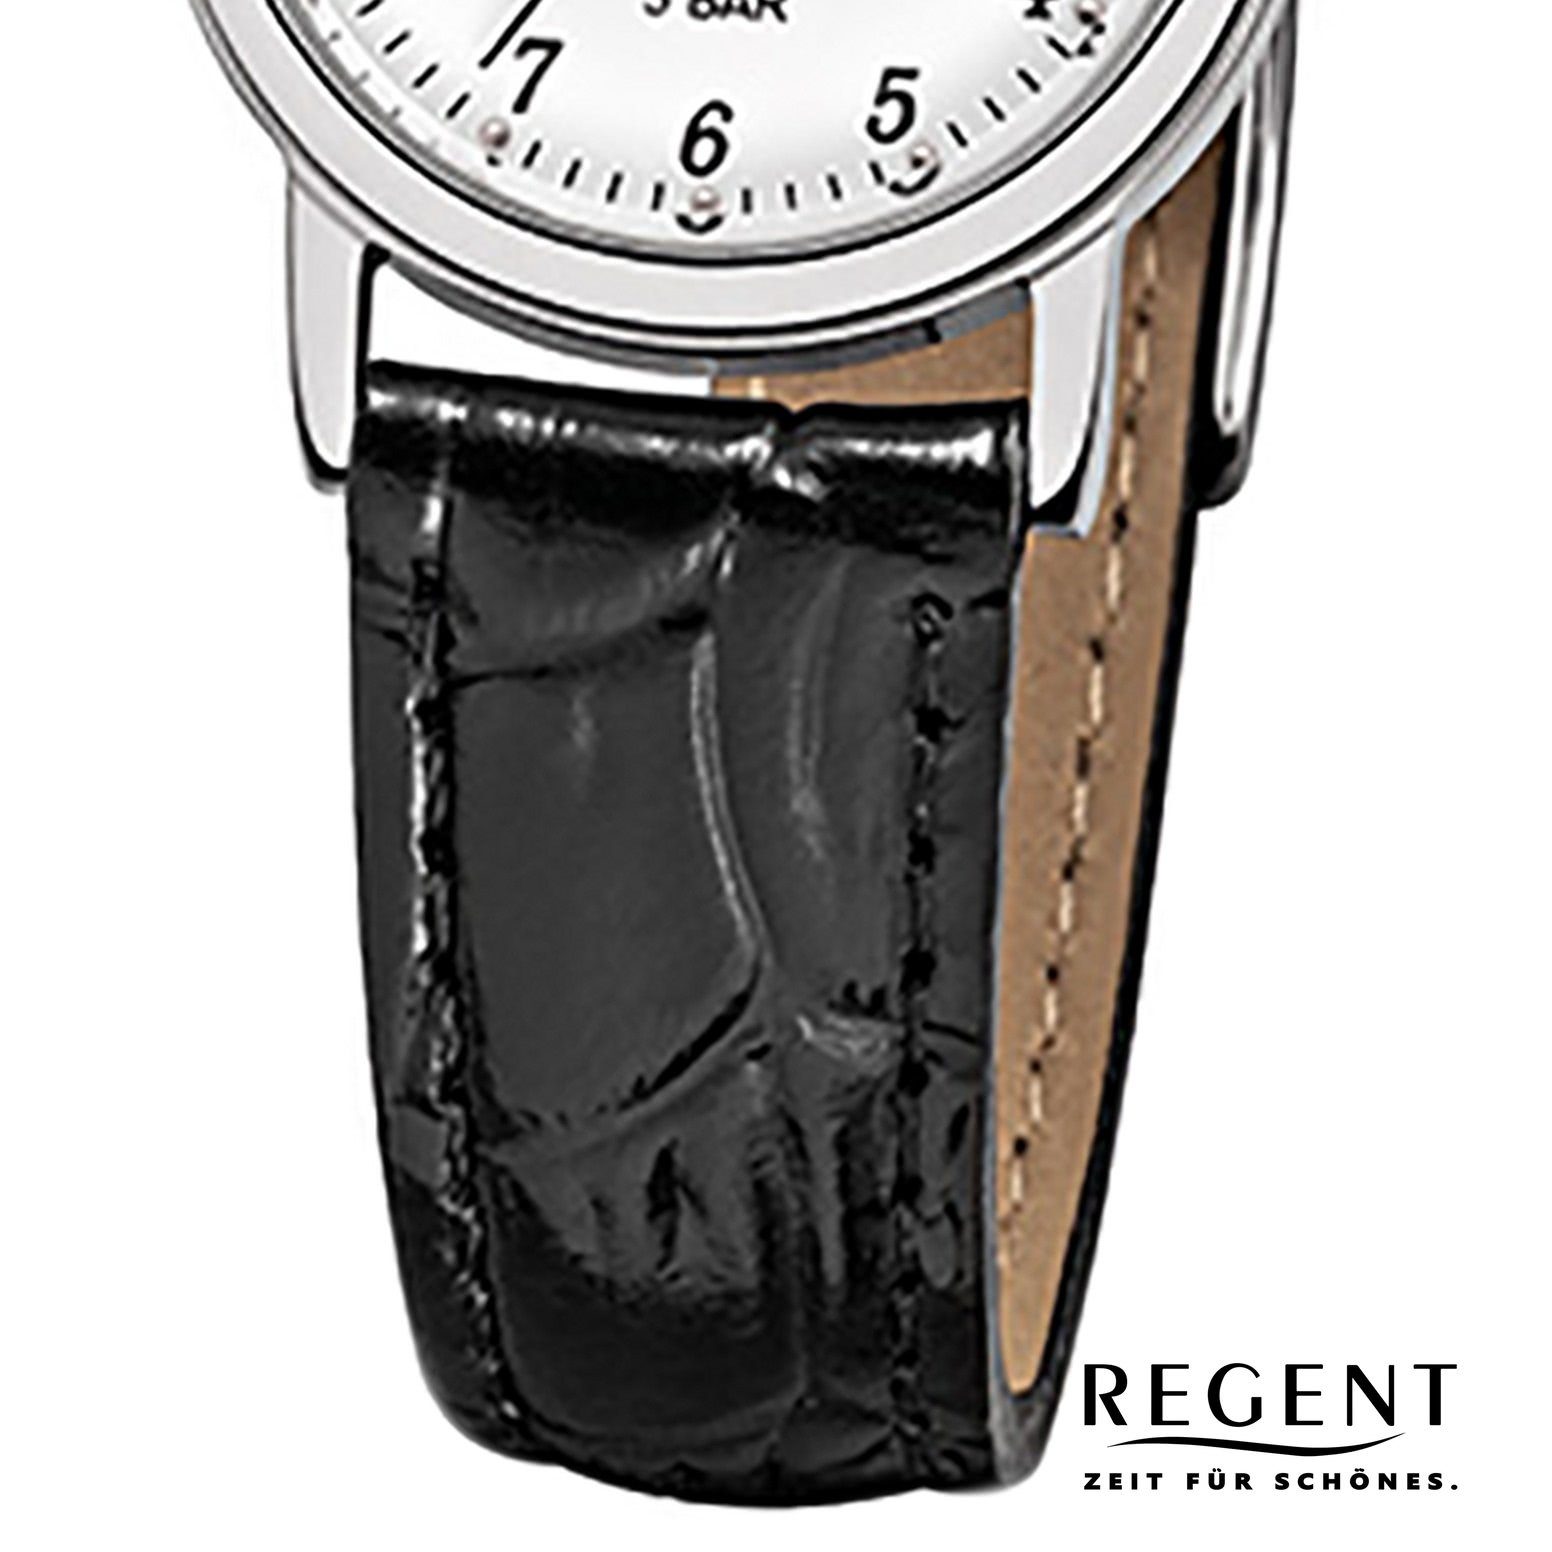 Regent schwarz 25mm), Regent Damen-Armbanduhr Armbanduhr Quarzuhr (ca. Analog, Lederarmband klein rund, Damen